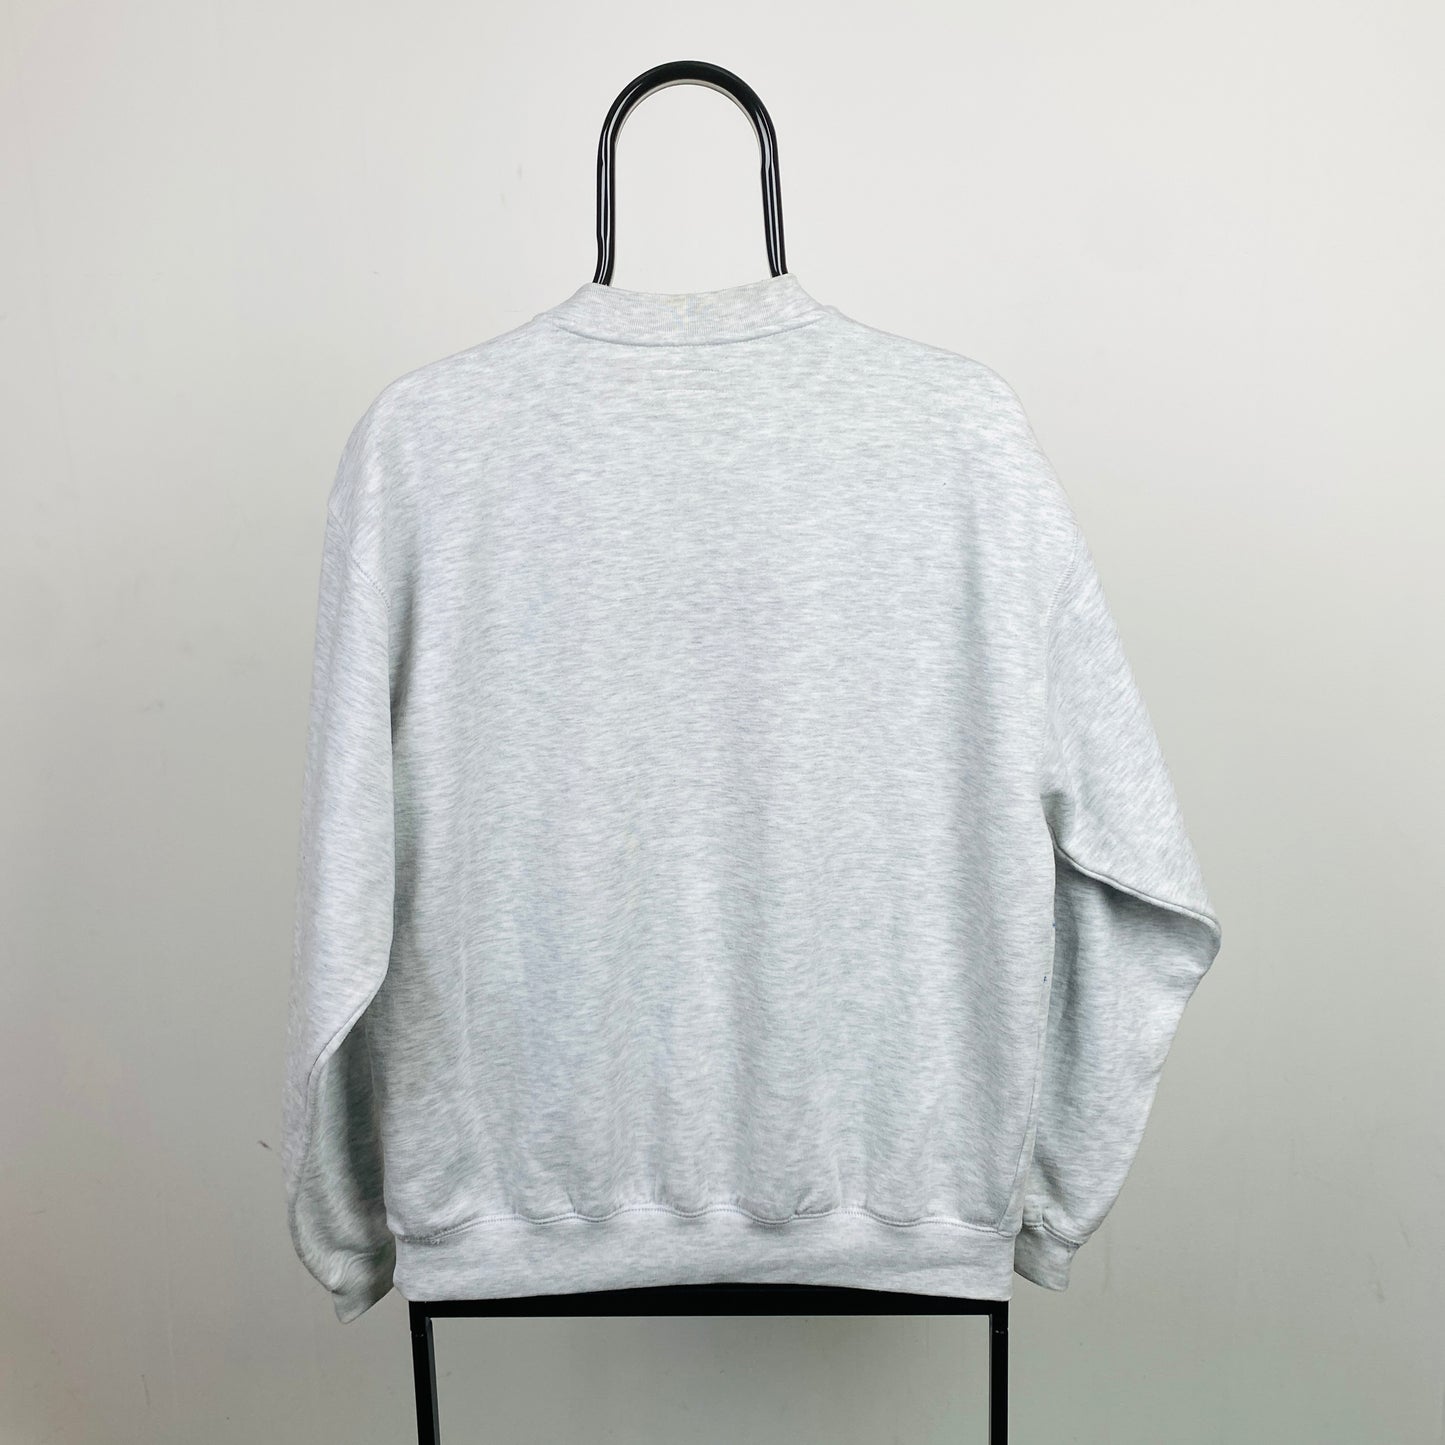 Retro Reebok Sweatshirt Grey Small